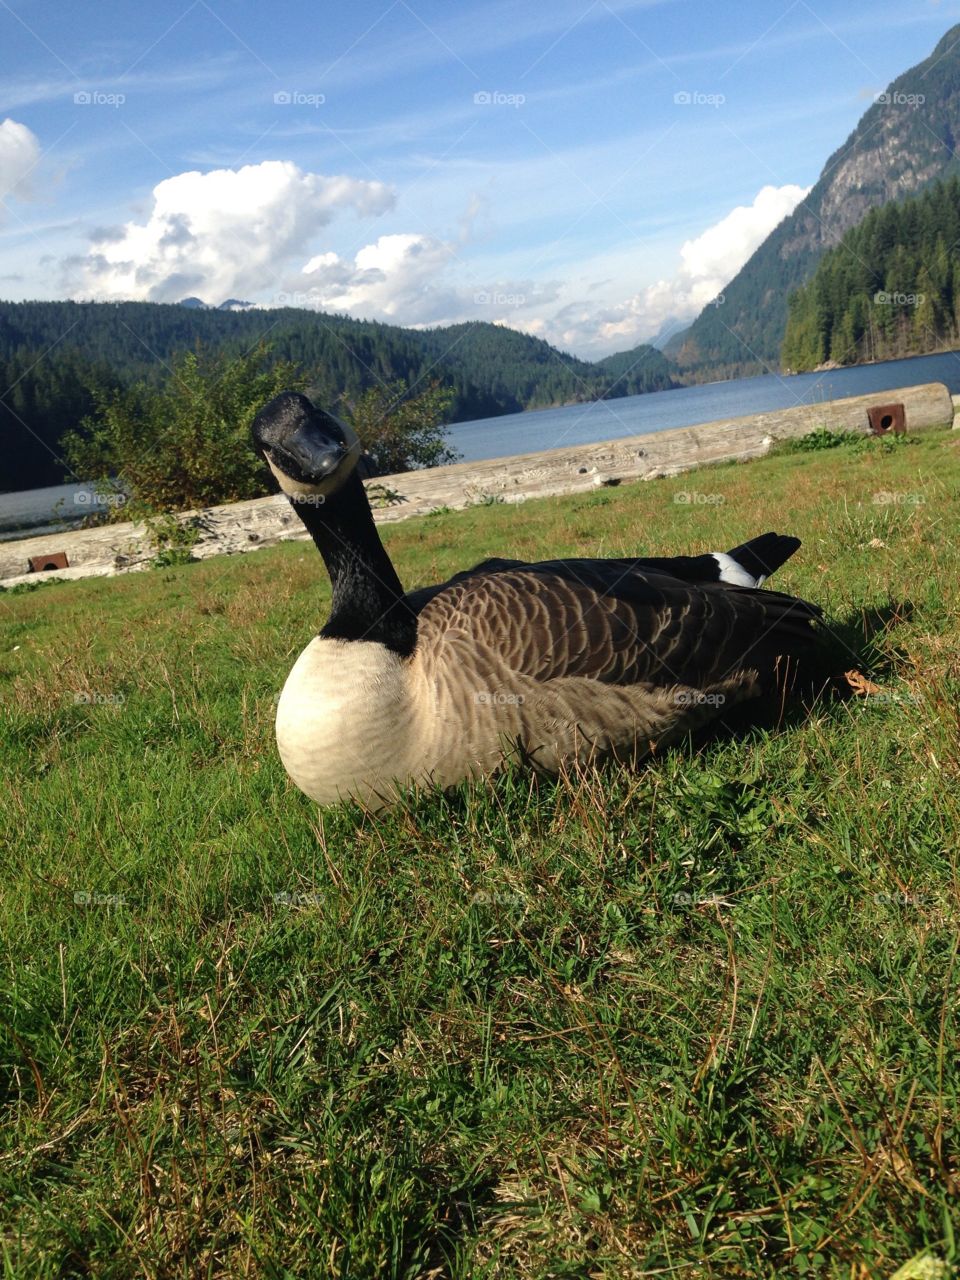 Canada goose on Buntzen lake near Vancouver, British Columbia Canada 